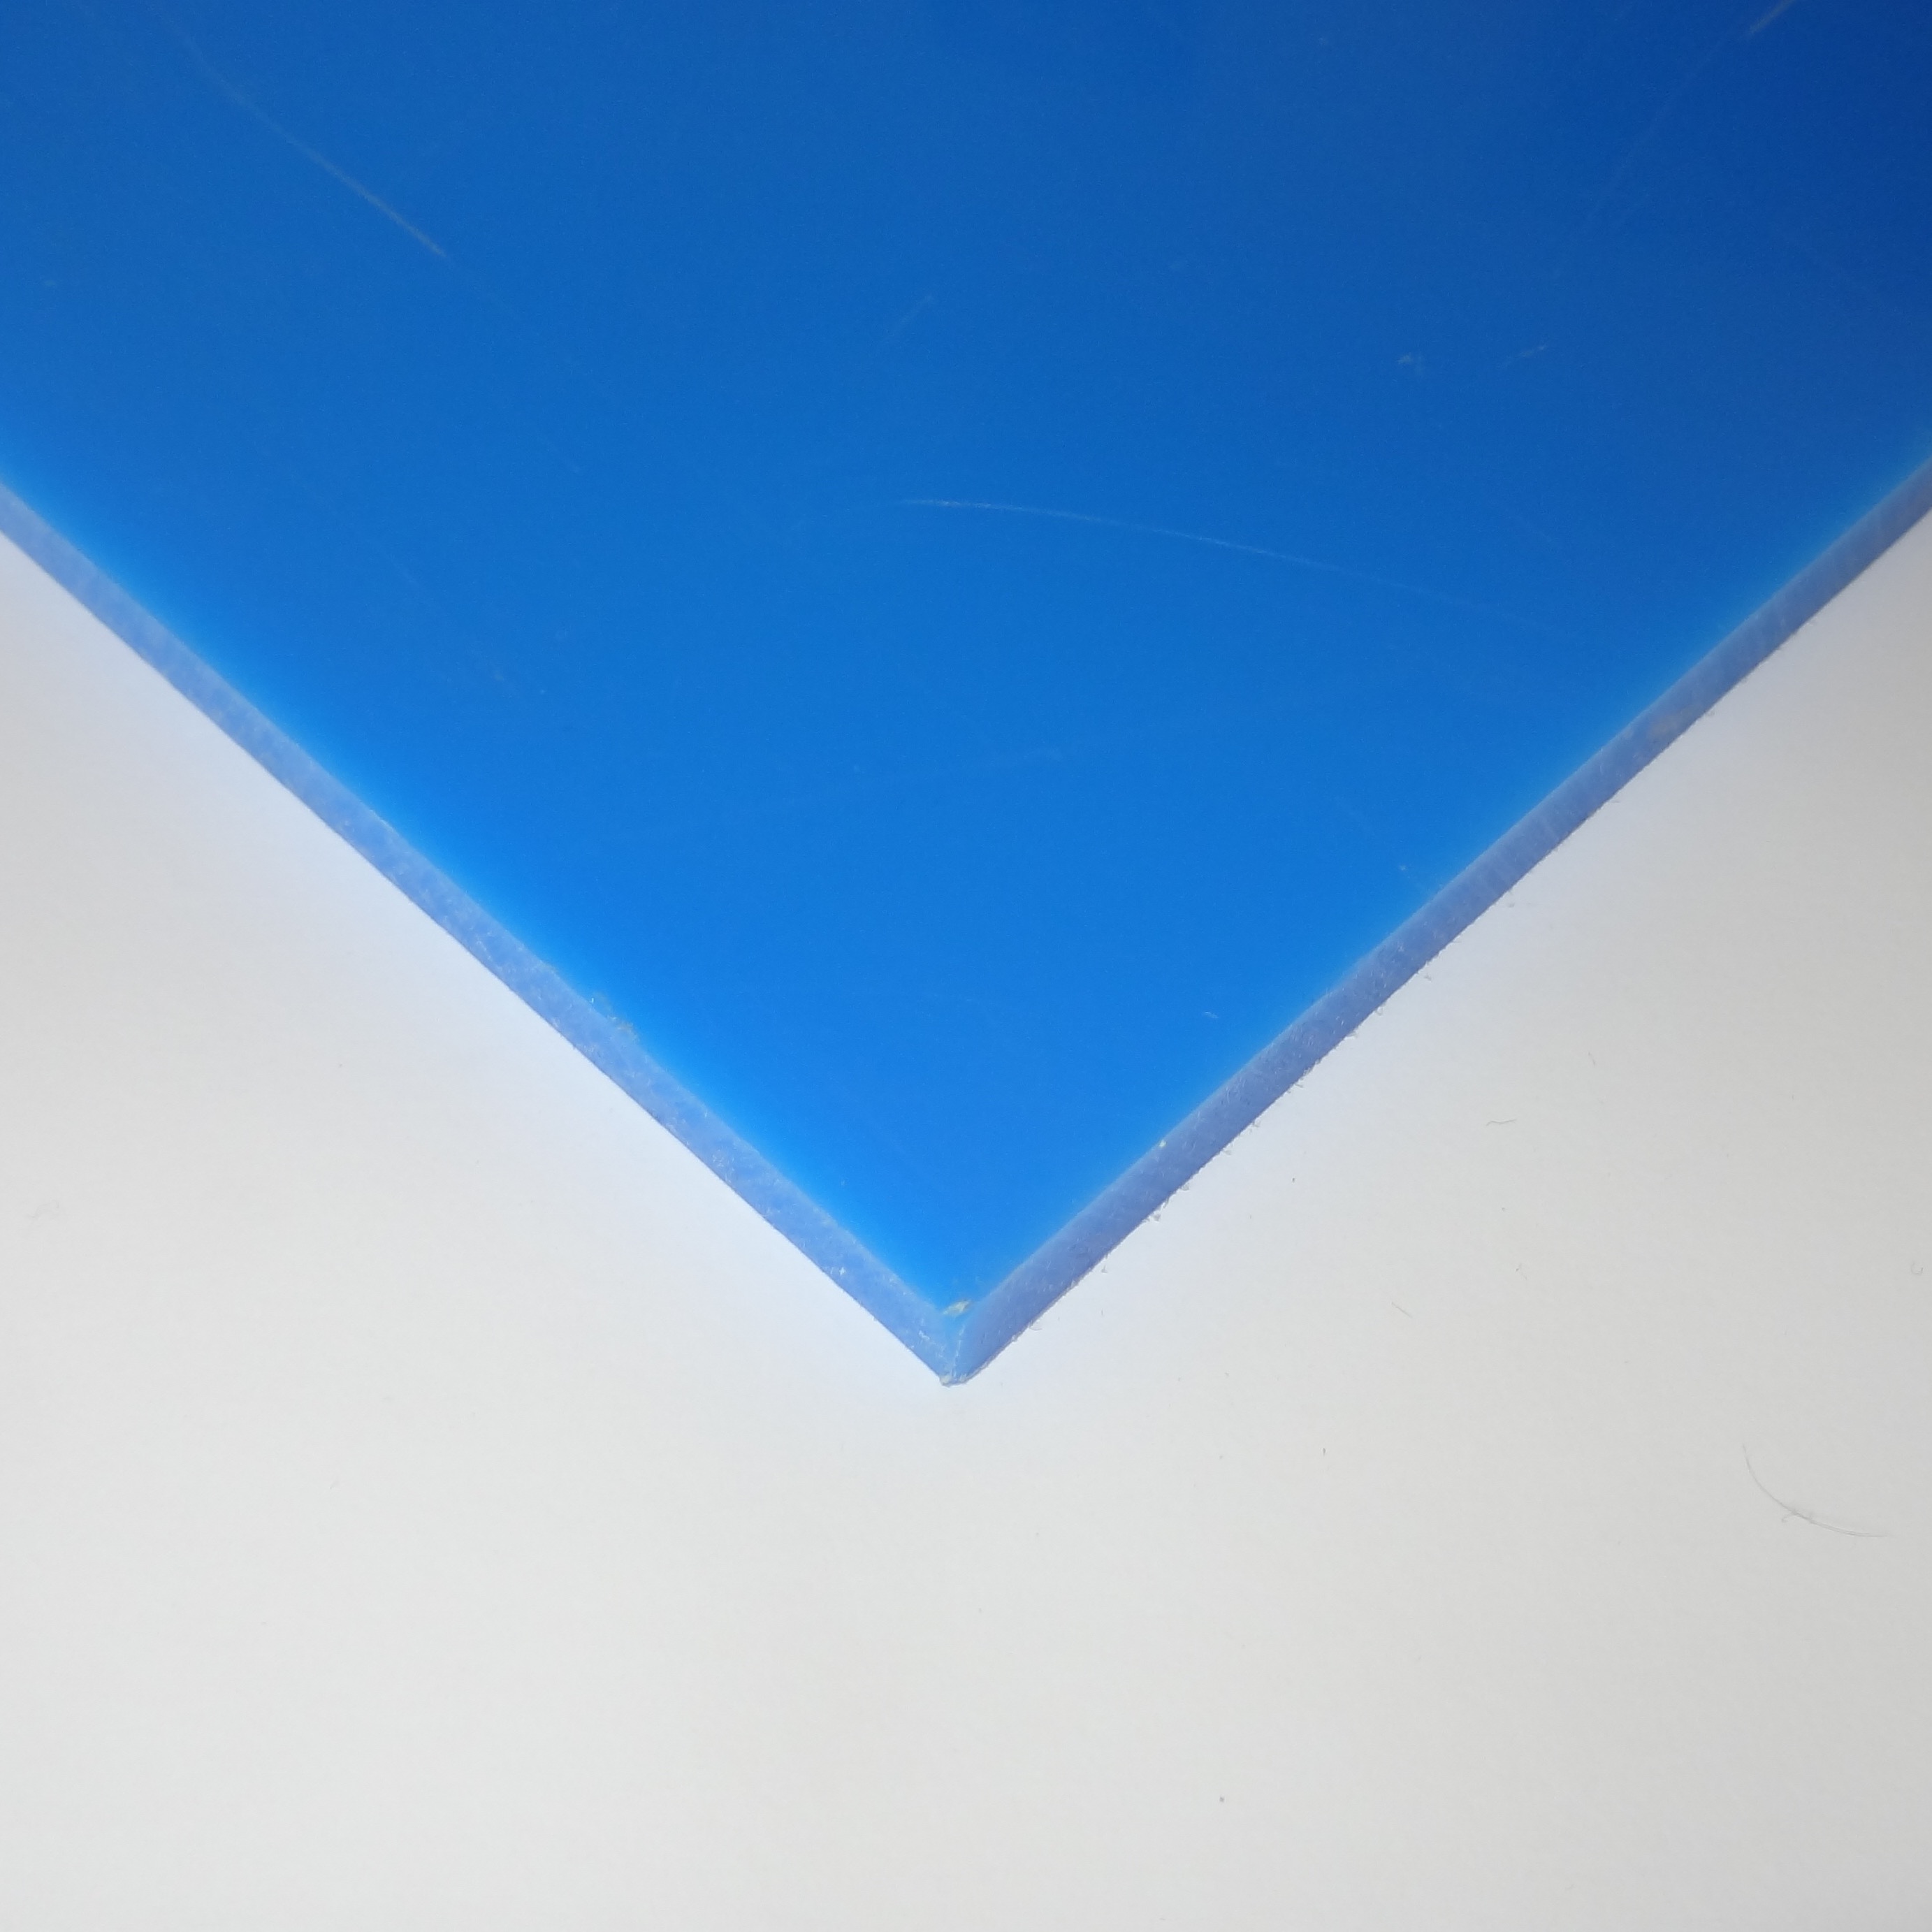 4" thick NYLATRON® MC 901 Unfilled Cast NYLON Laminate Sheet, blue,  24"W x 48"L sheet